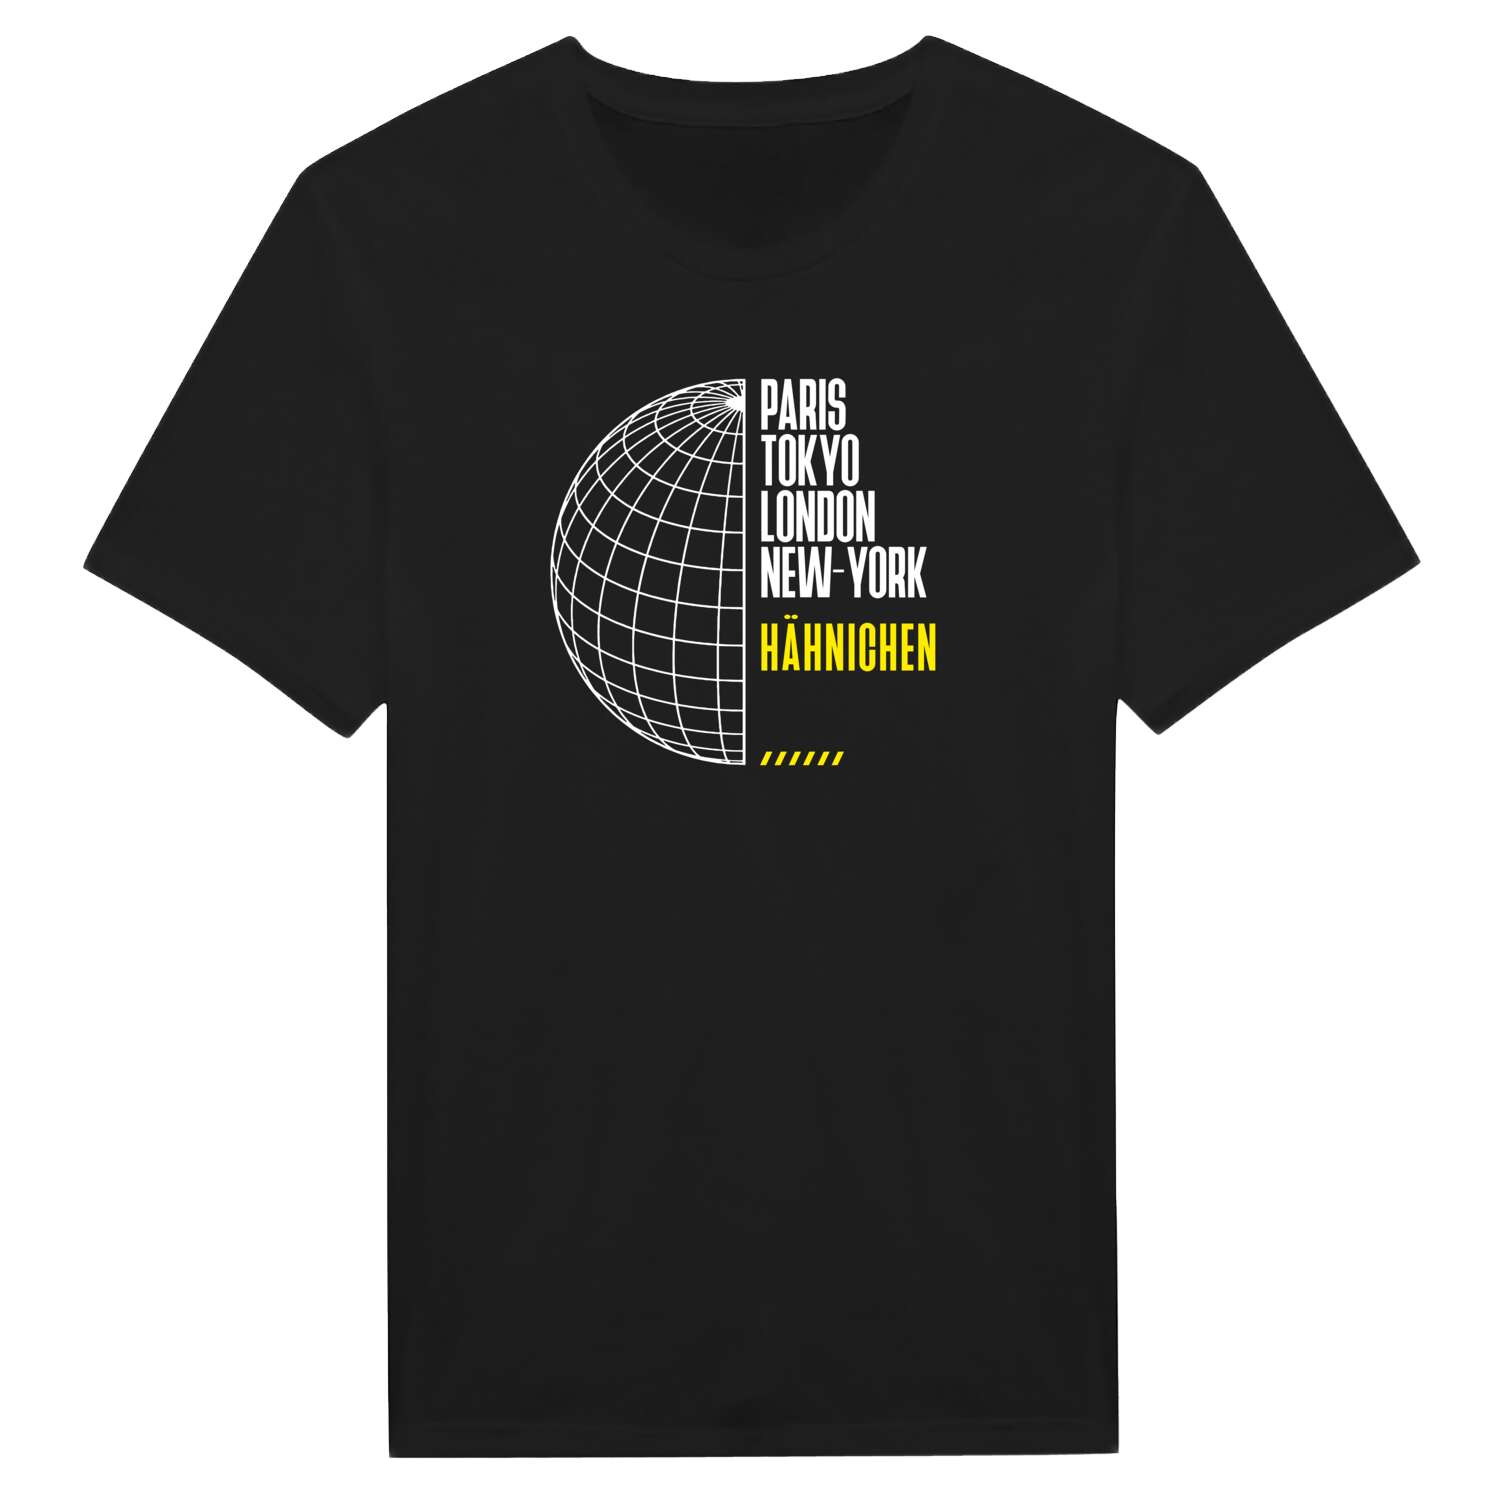 Hähnichen T-Shirt »Paris Tokyo London«